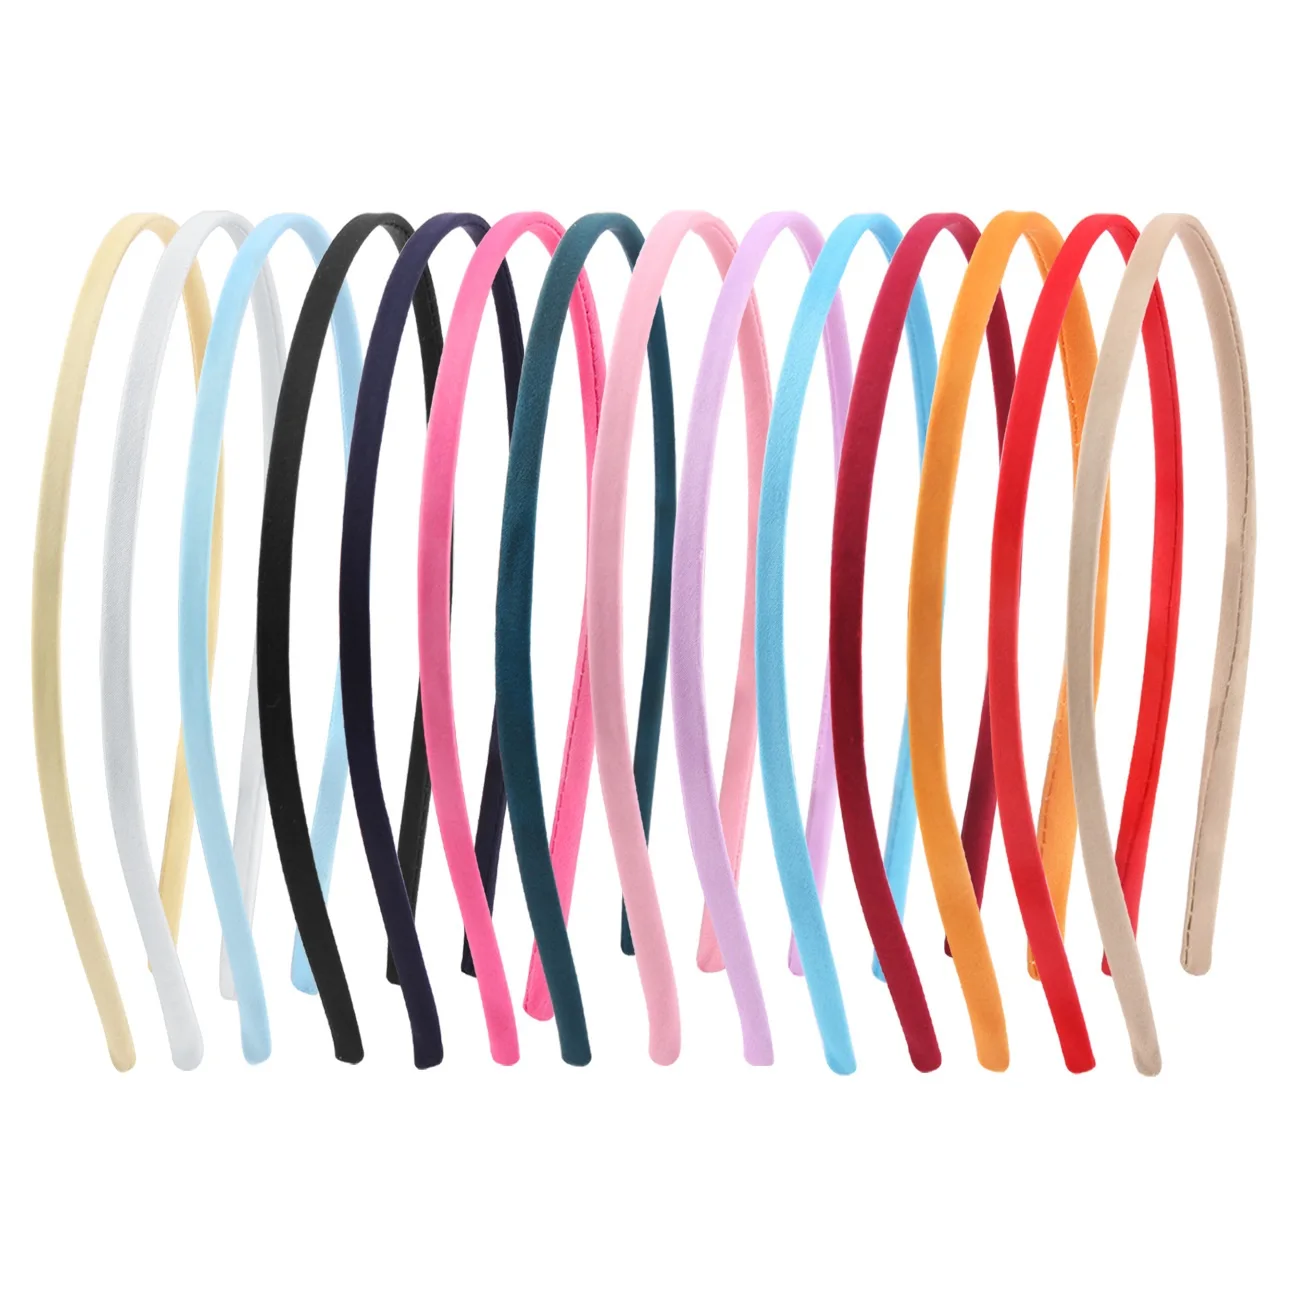 30 Pieces Satin Headbands for Girls Headbands 5mm Satin Covered Plain Headband Colorful DIY Headband, 14 Colors